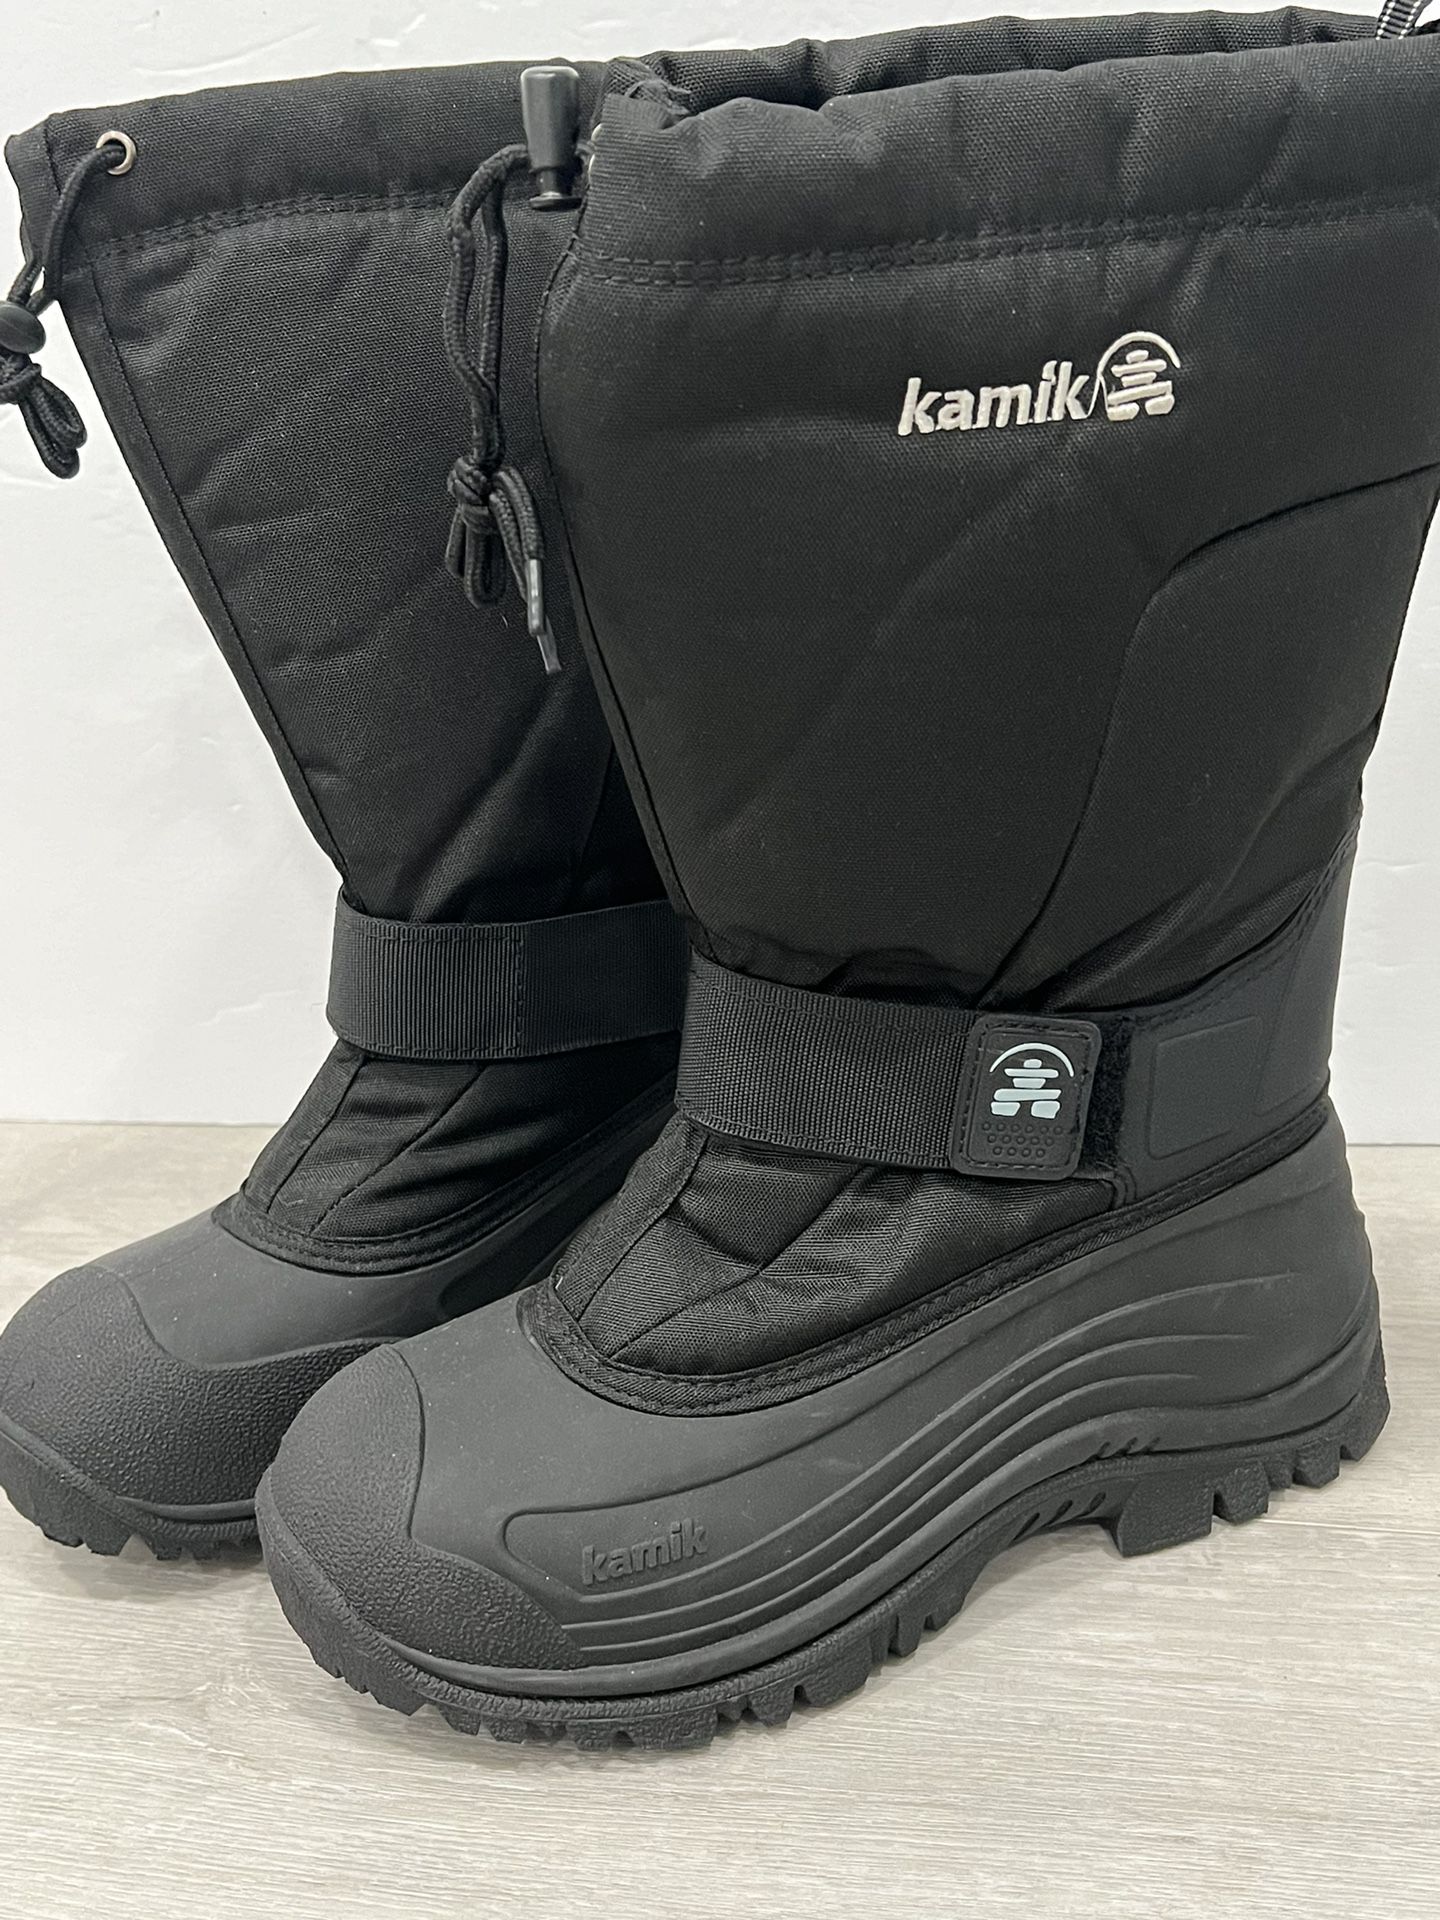 KAMIK Men’s Winter Snow Boots 